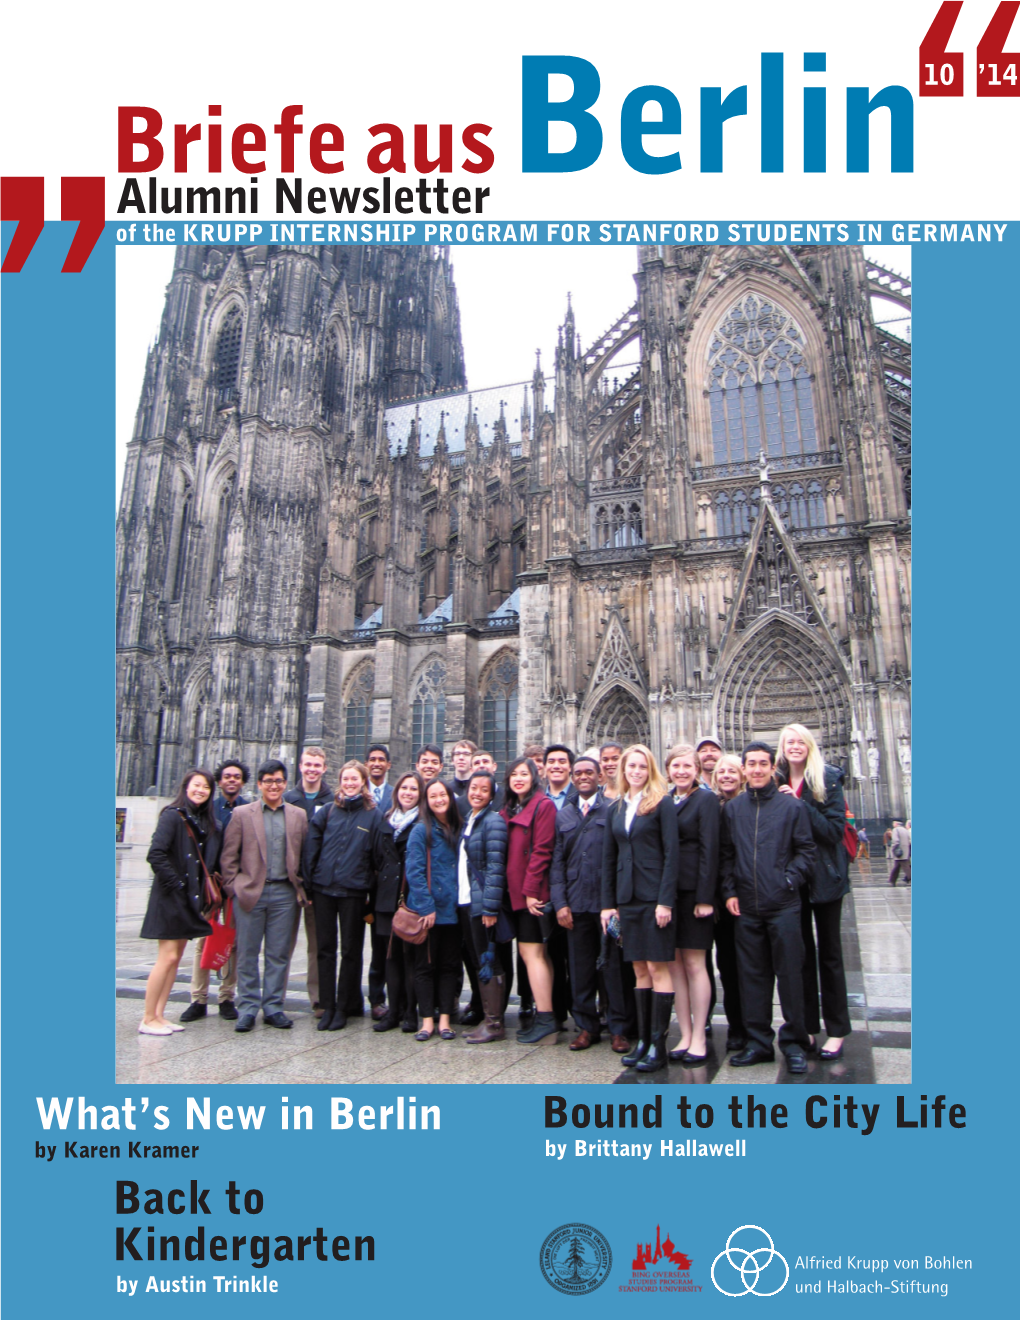 Briefe Ausberlin Alumni Newsletter of the KRUPP INTERNSHIP PROGRAM for STANFORD STUDENTS in GERMANY